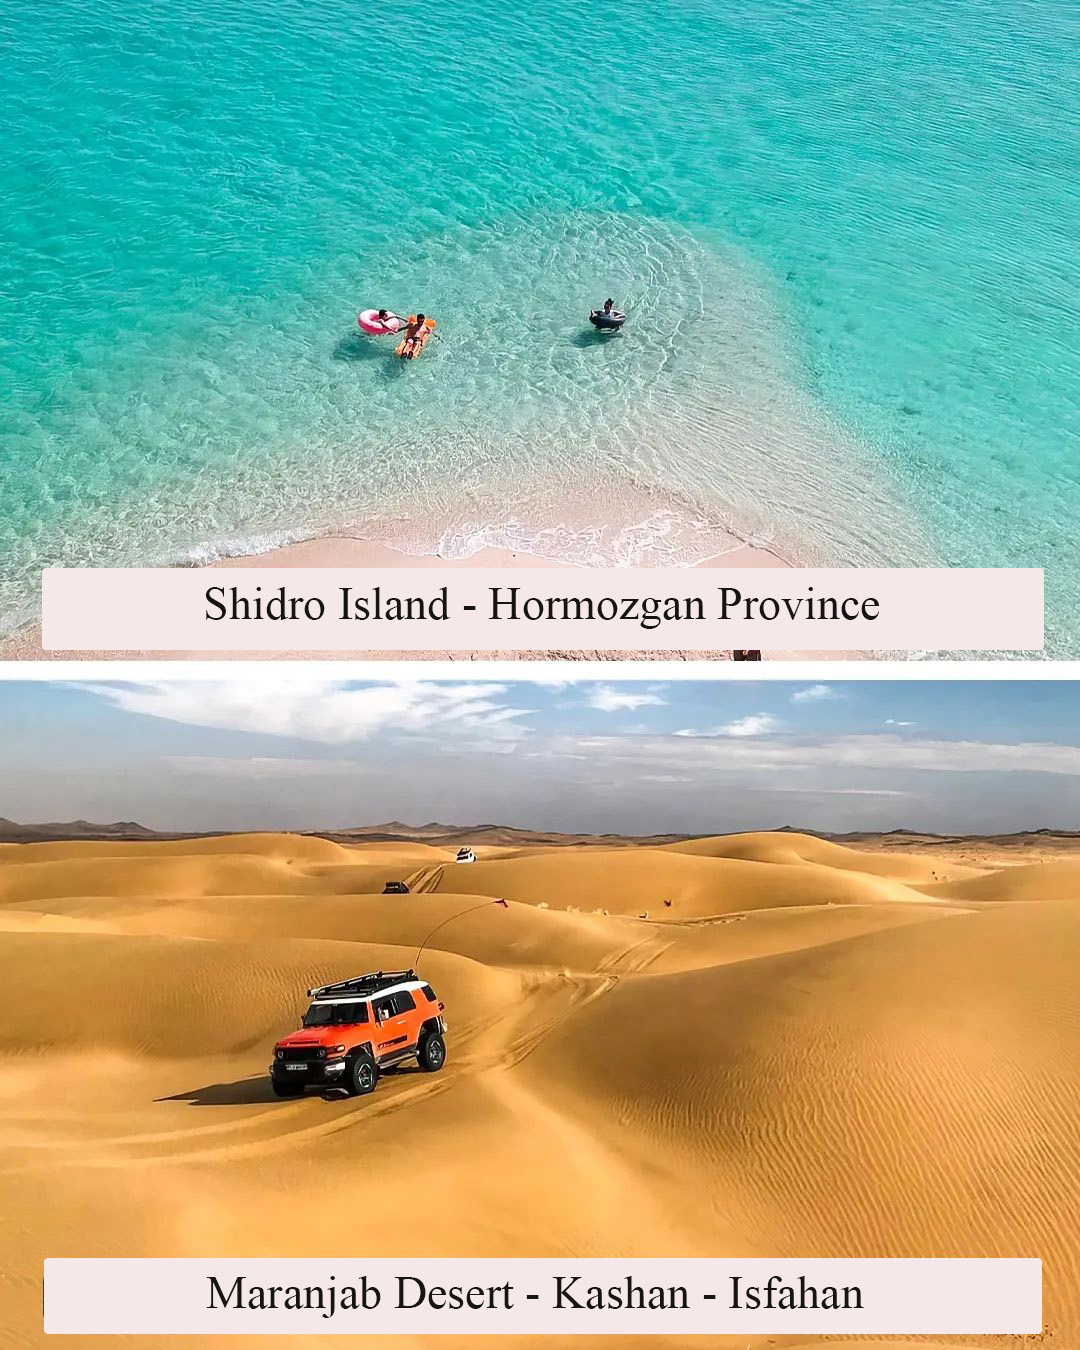 Shidroo or Shidvar Island and Maranjab Desert